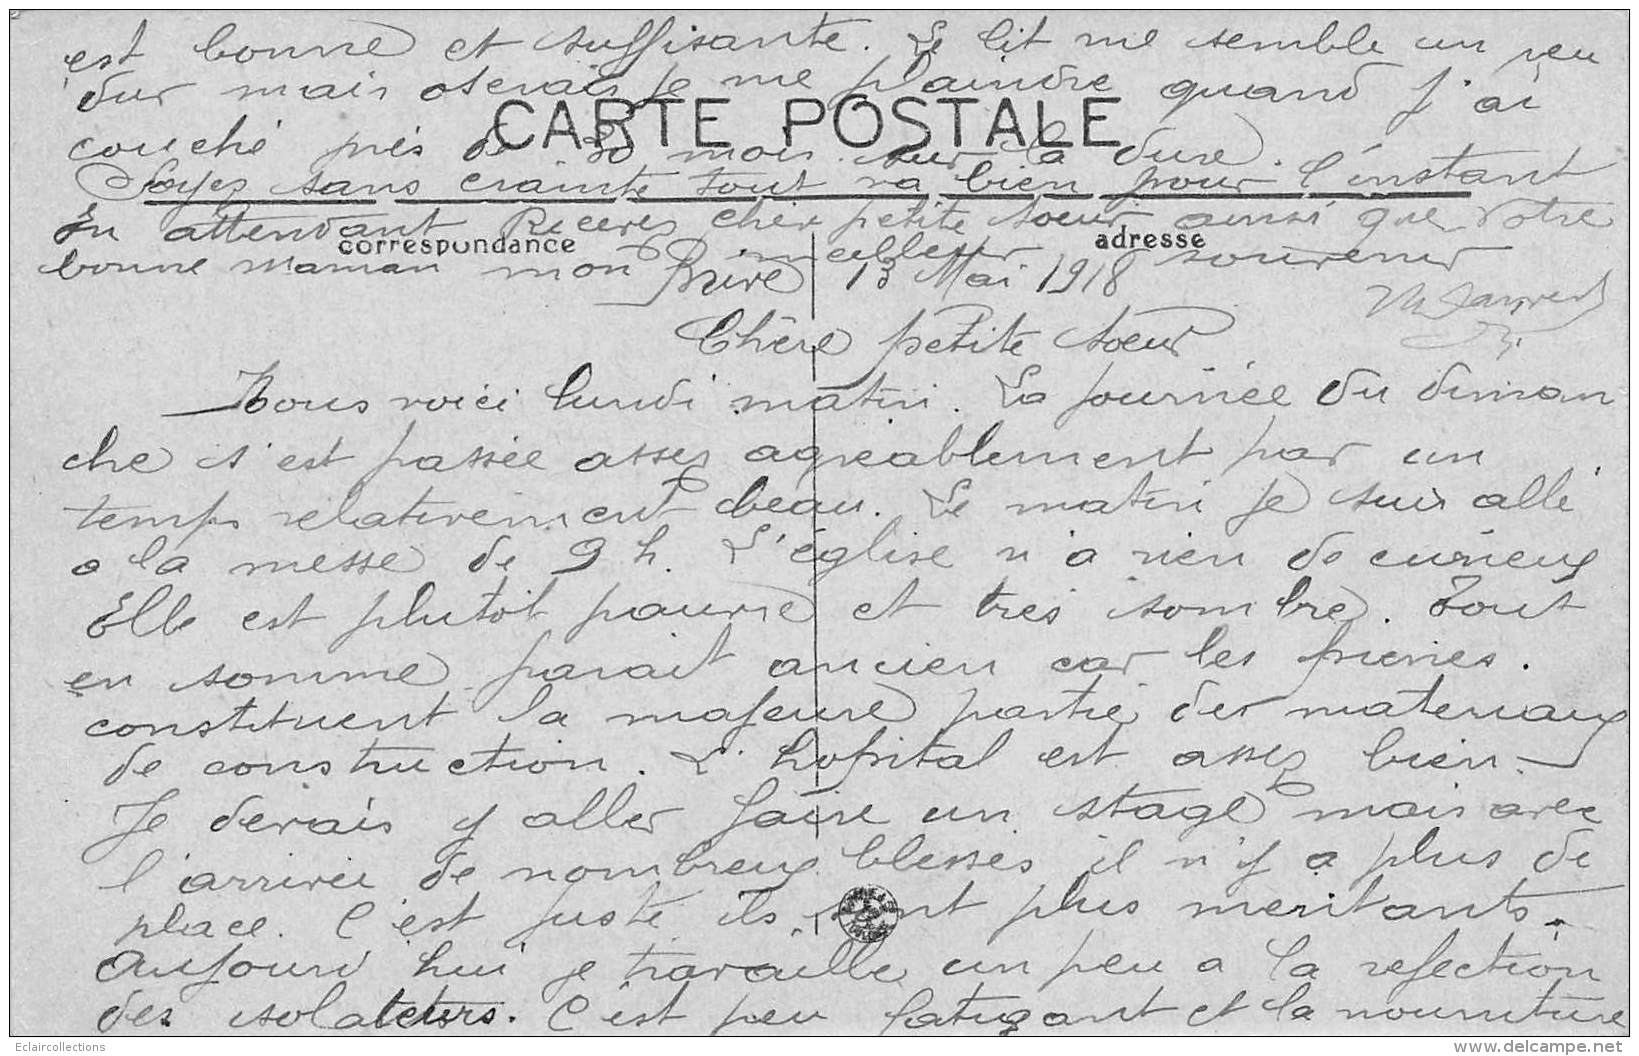 Brive la Gaillarde     19 ...  4 cartes dont: Gare, Hôtel de Ville, Caserne Brune       (voir scan)